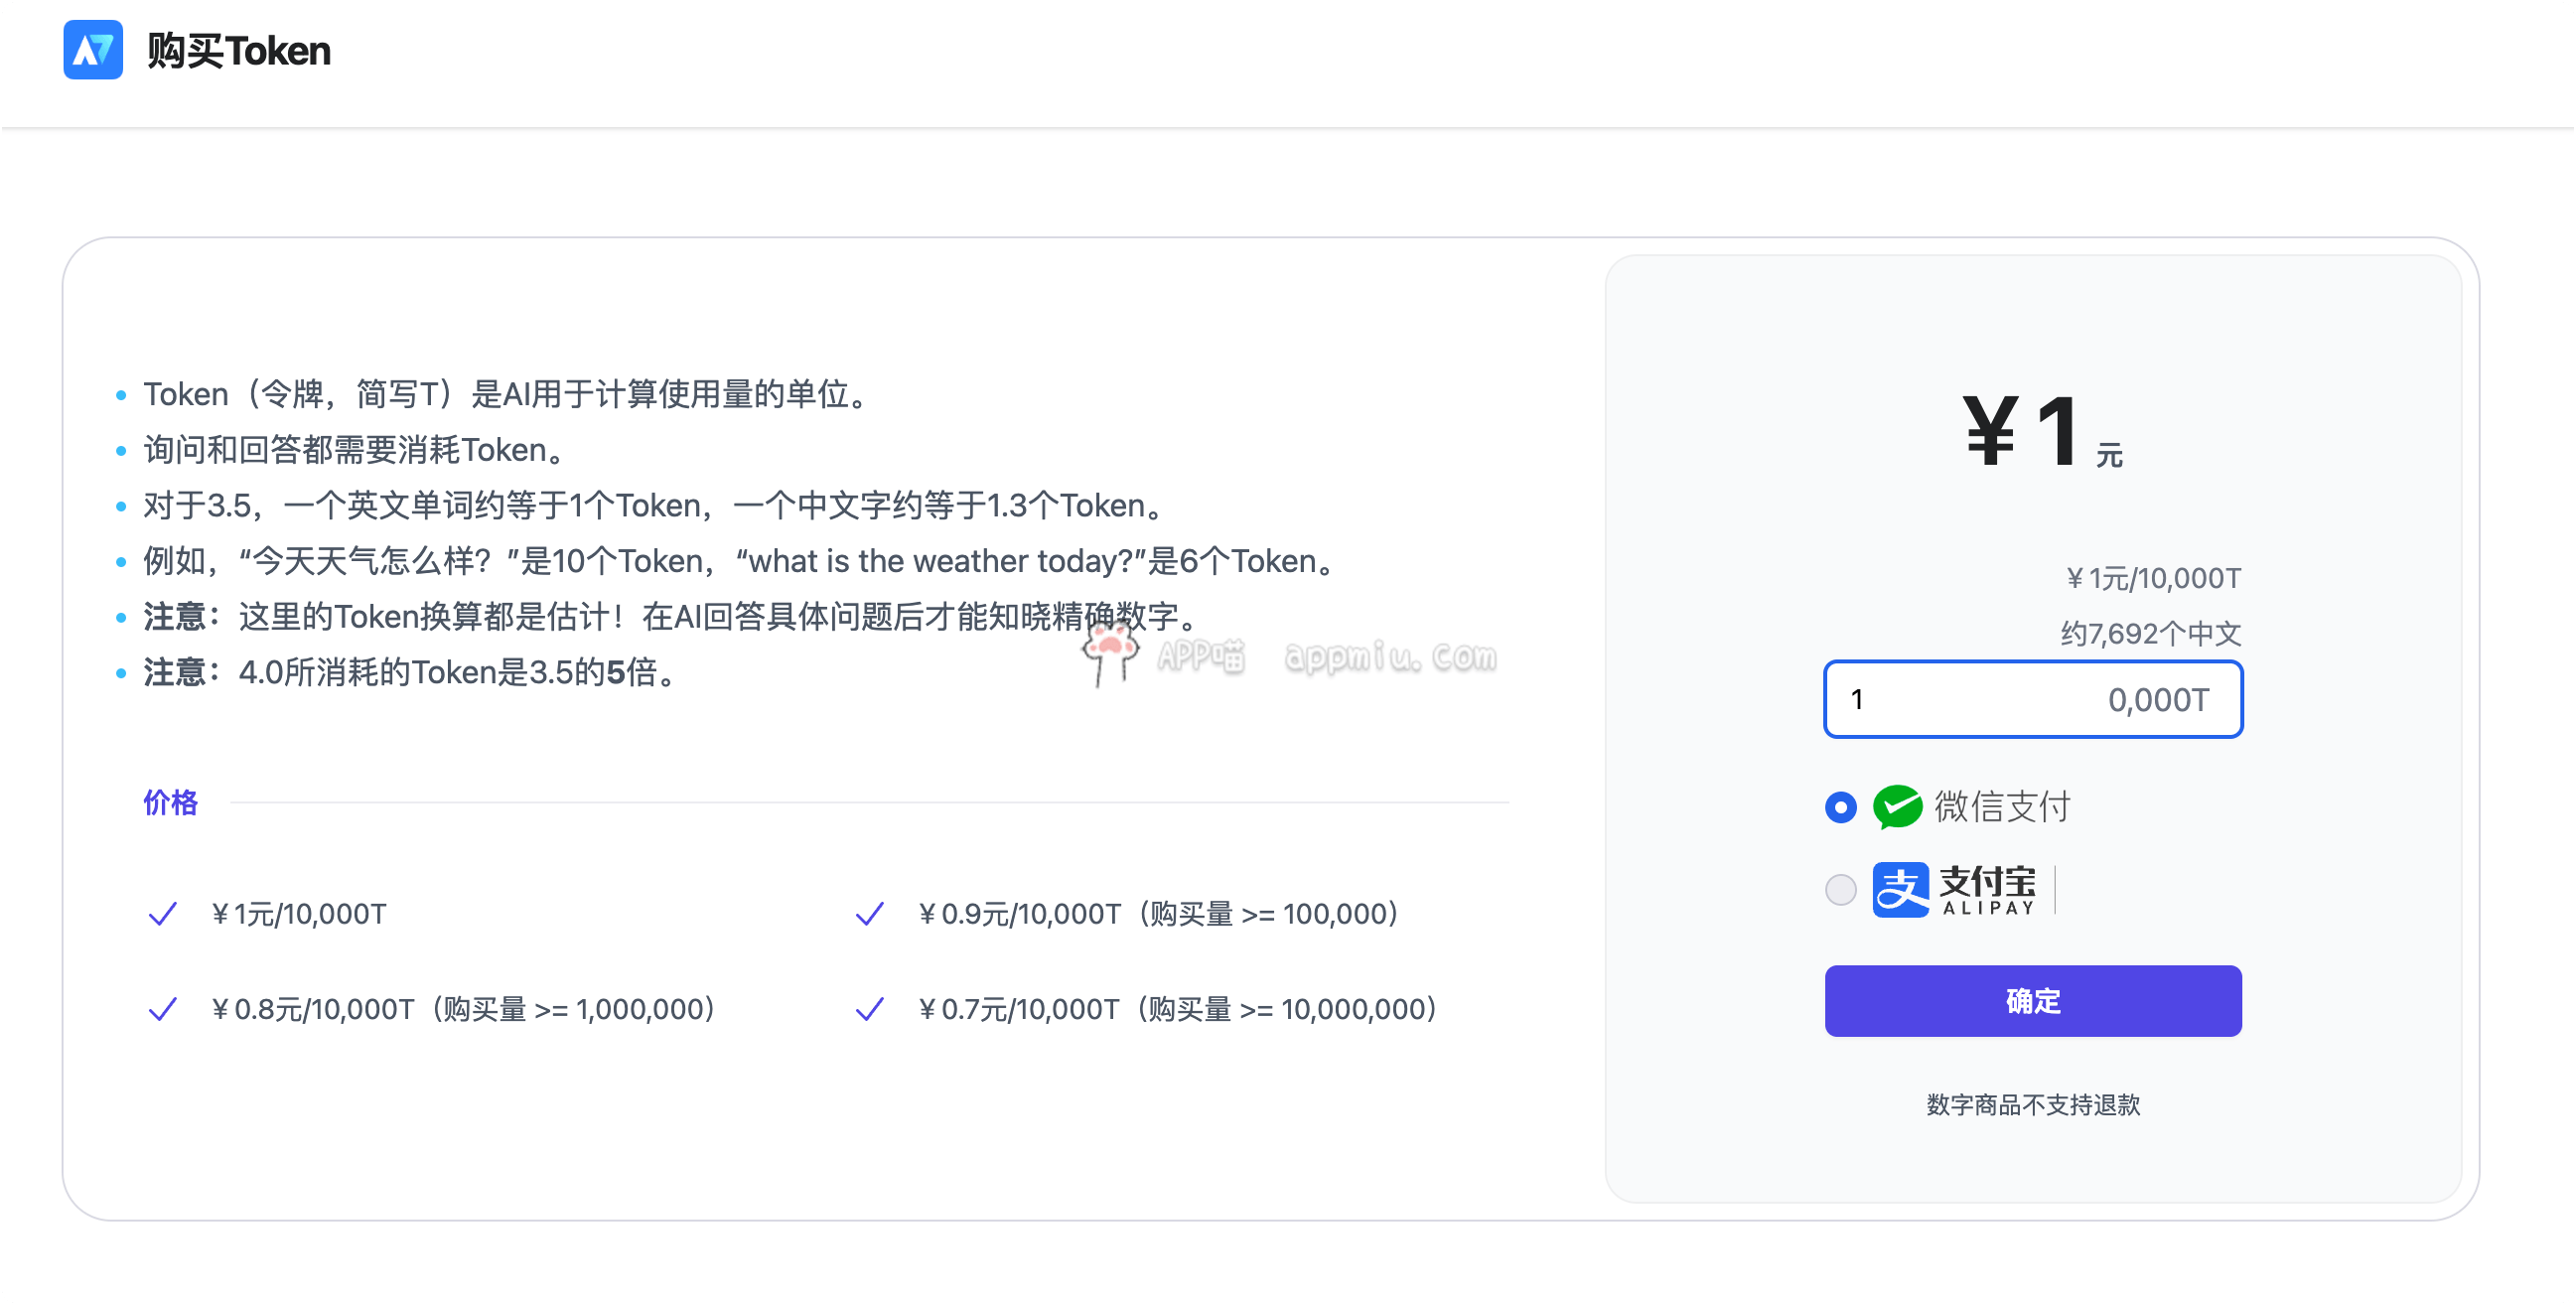 AI7号 – ChatGPT 镜像 AI中文站：注册送1万token-APP喵